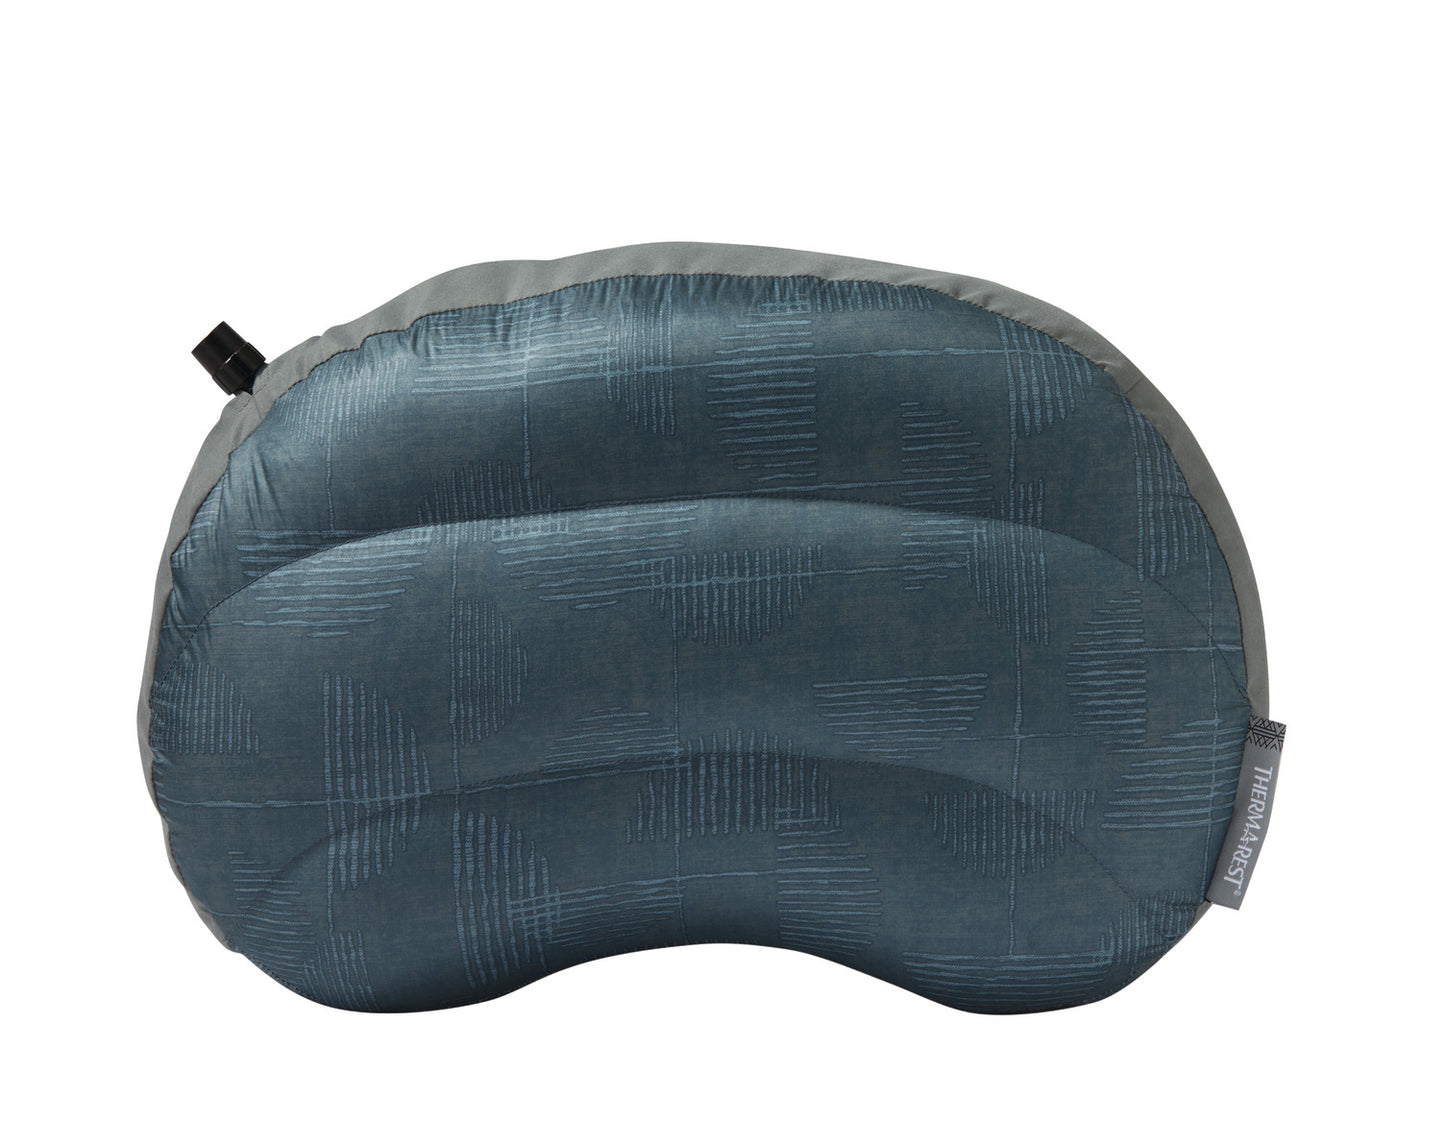 Therm-a-Rest Air Head™ Down Pillow